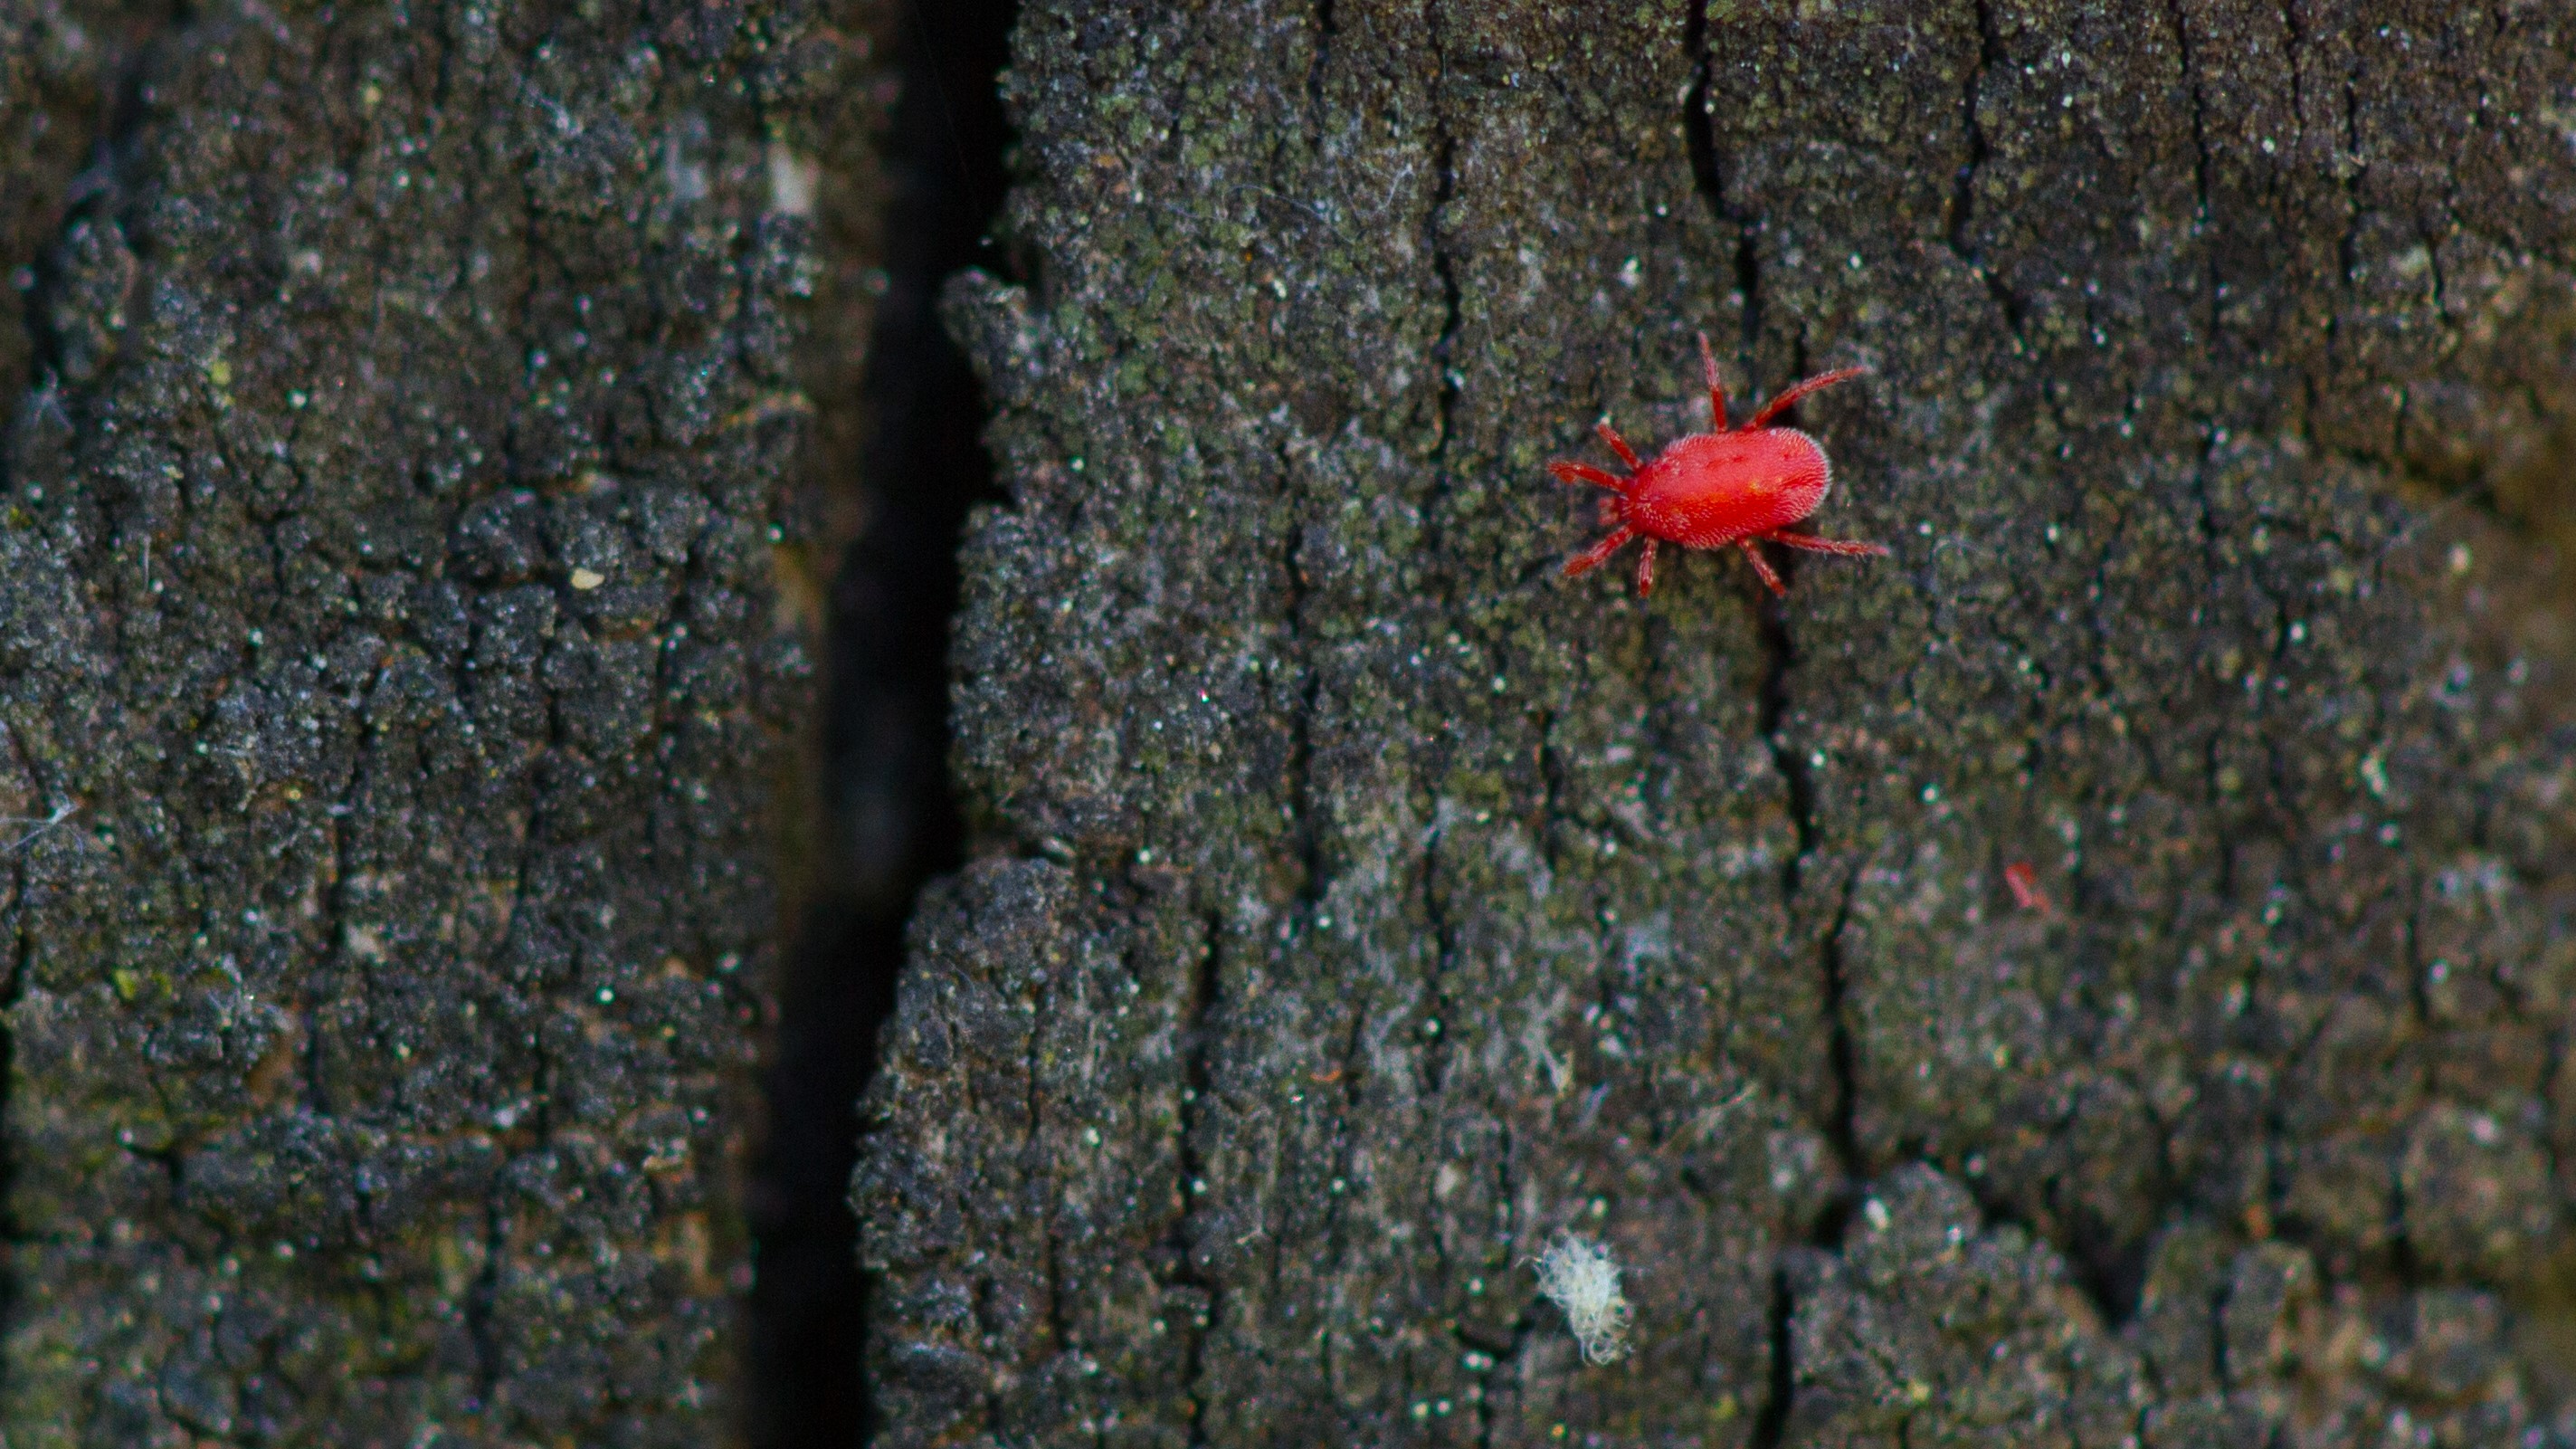 A chigger crawling on tree bark.